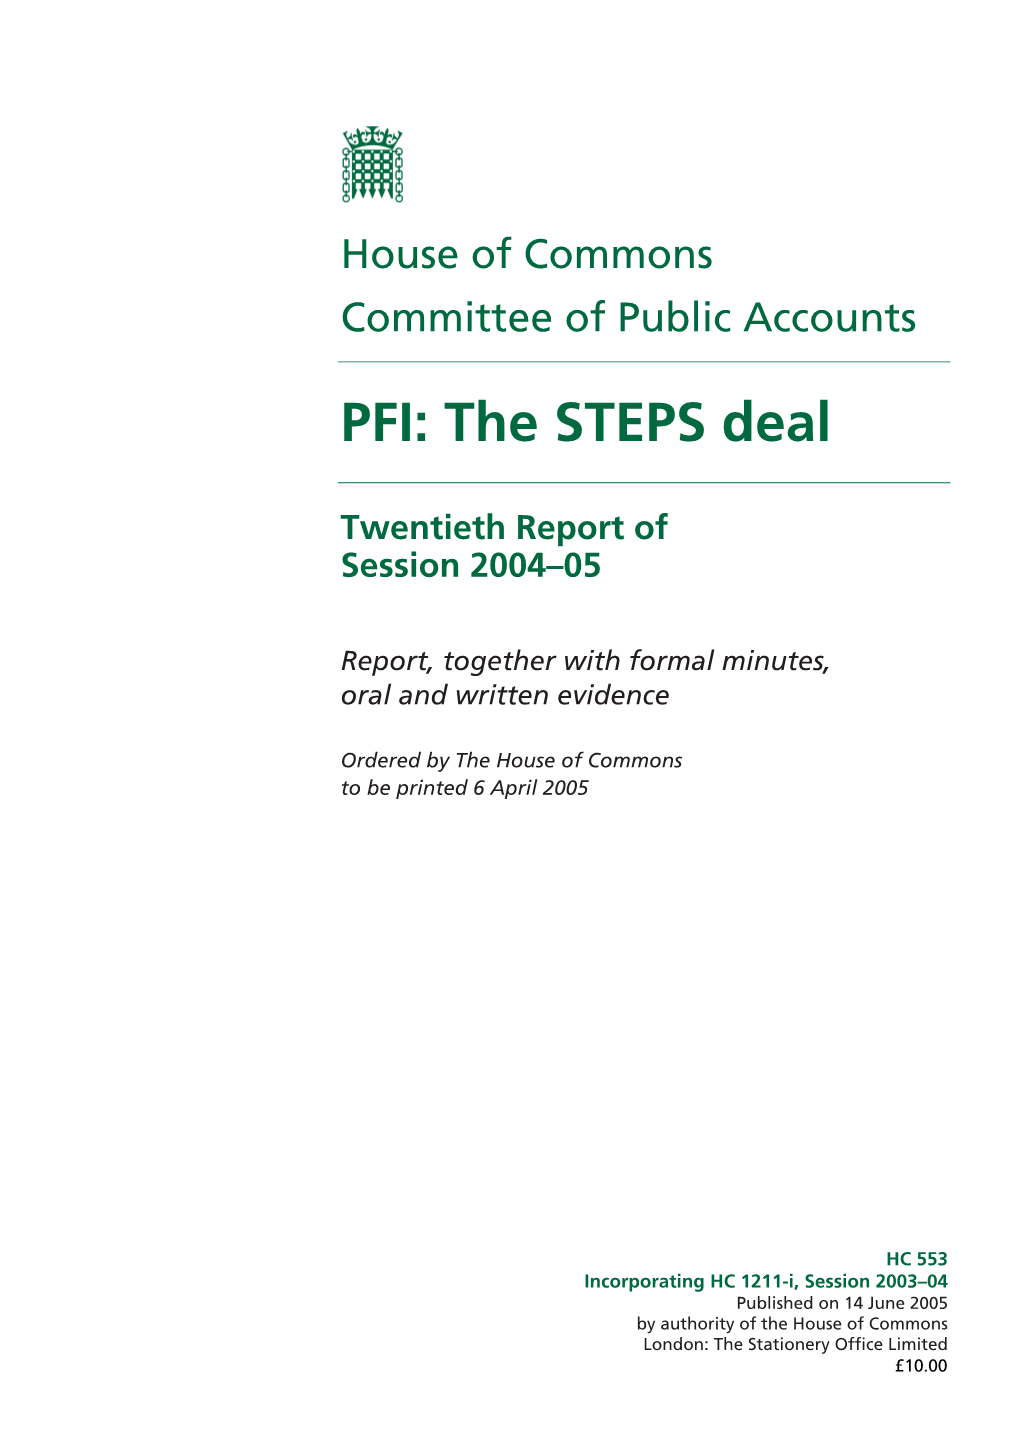 PFI: the STEPS Deal